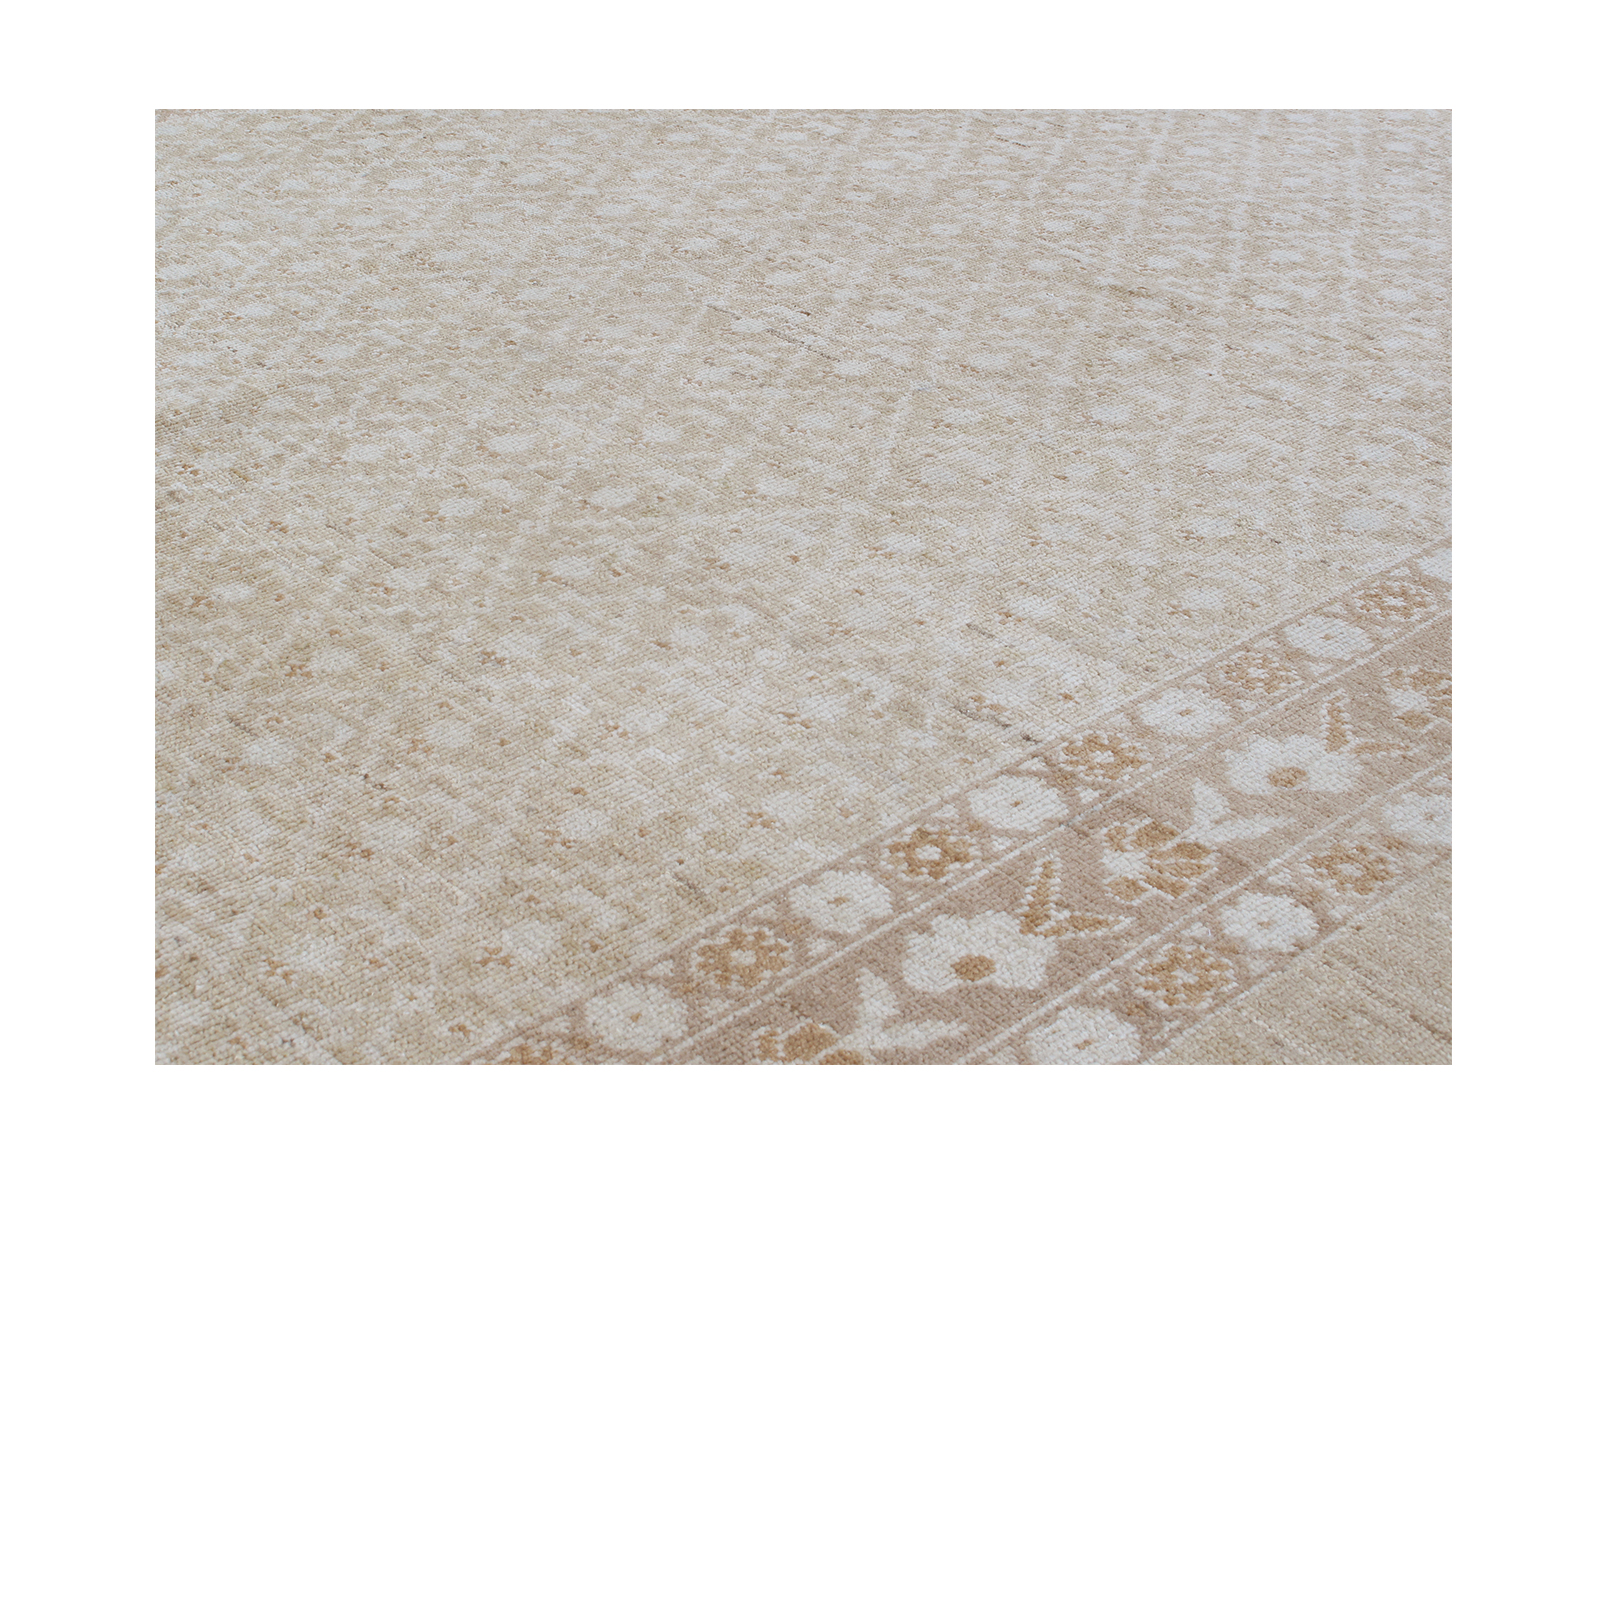 This Serab rug is made of fine handspun wool.